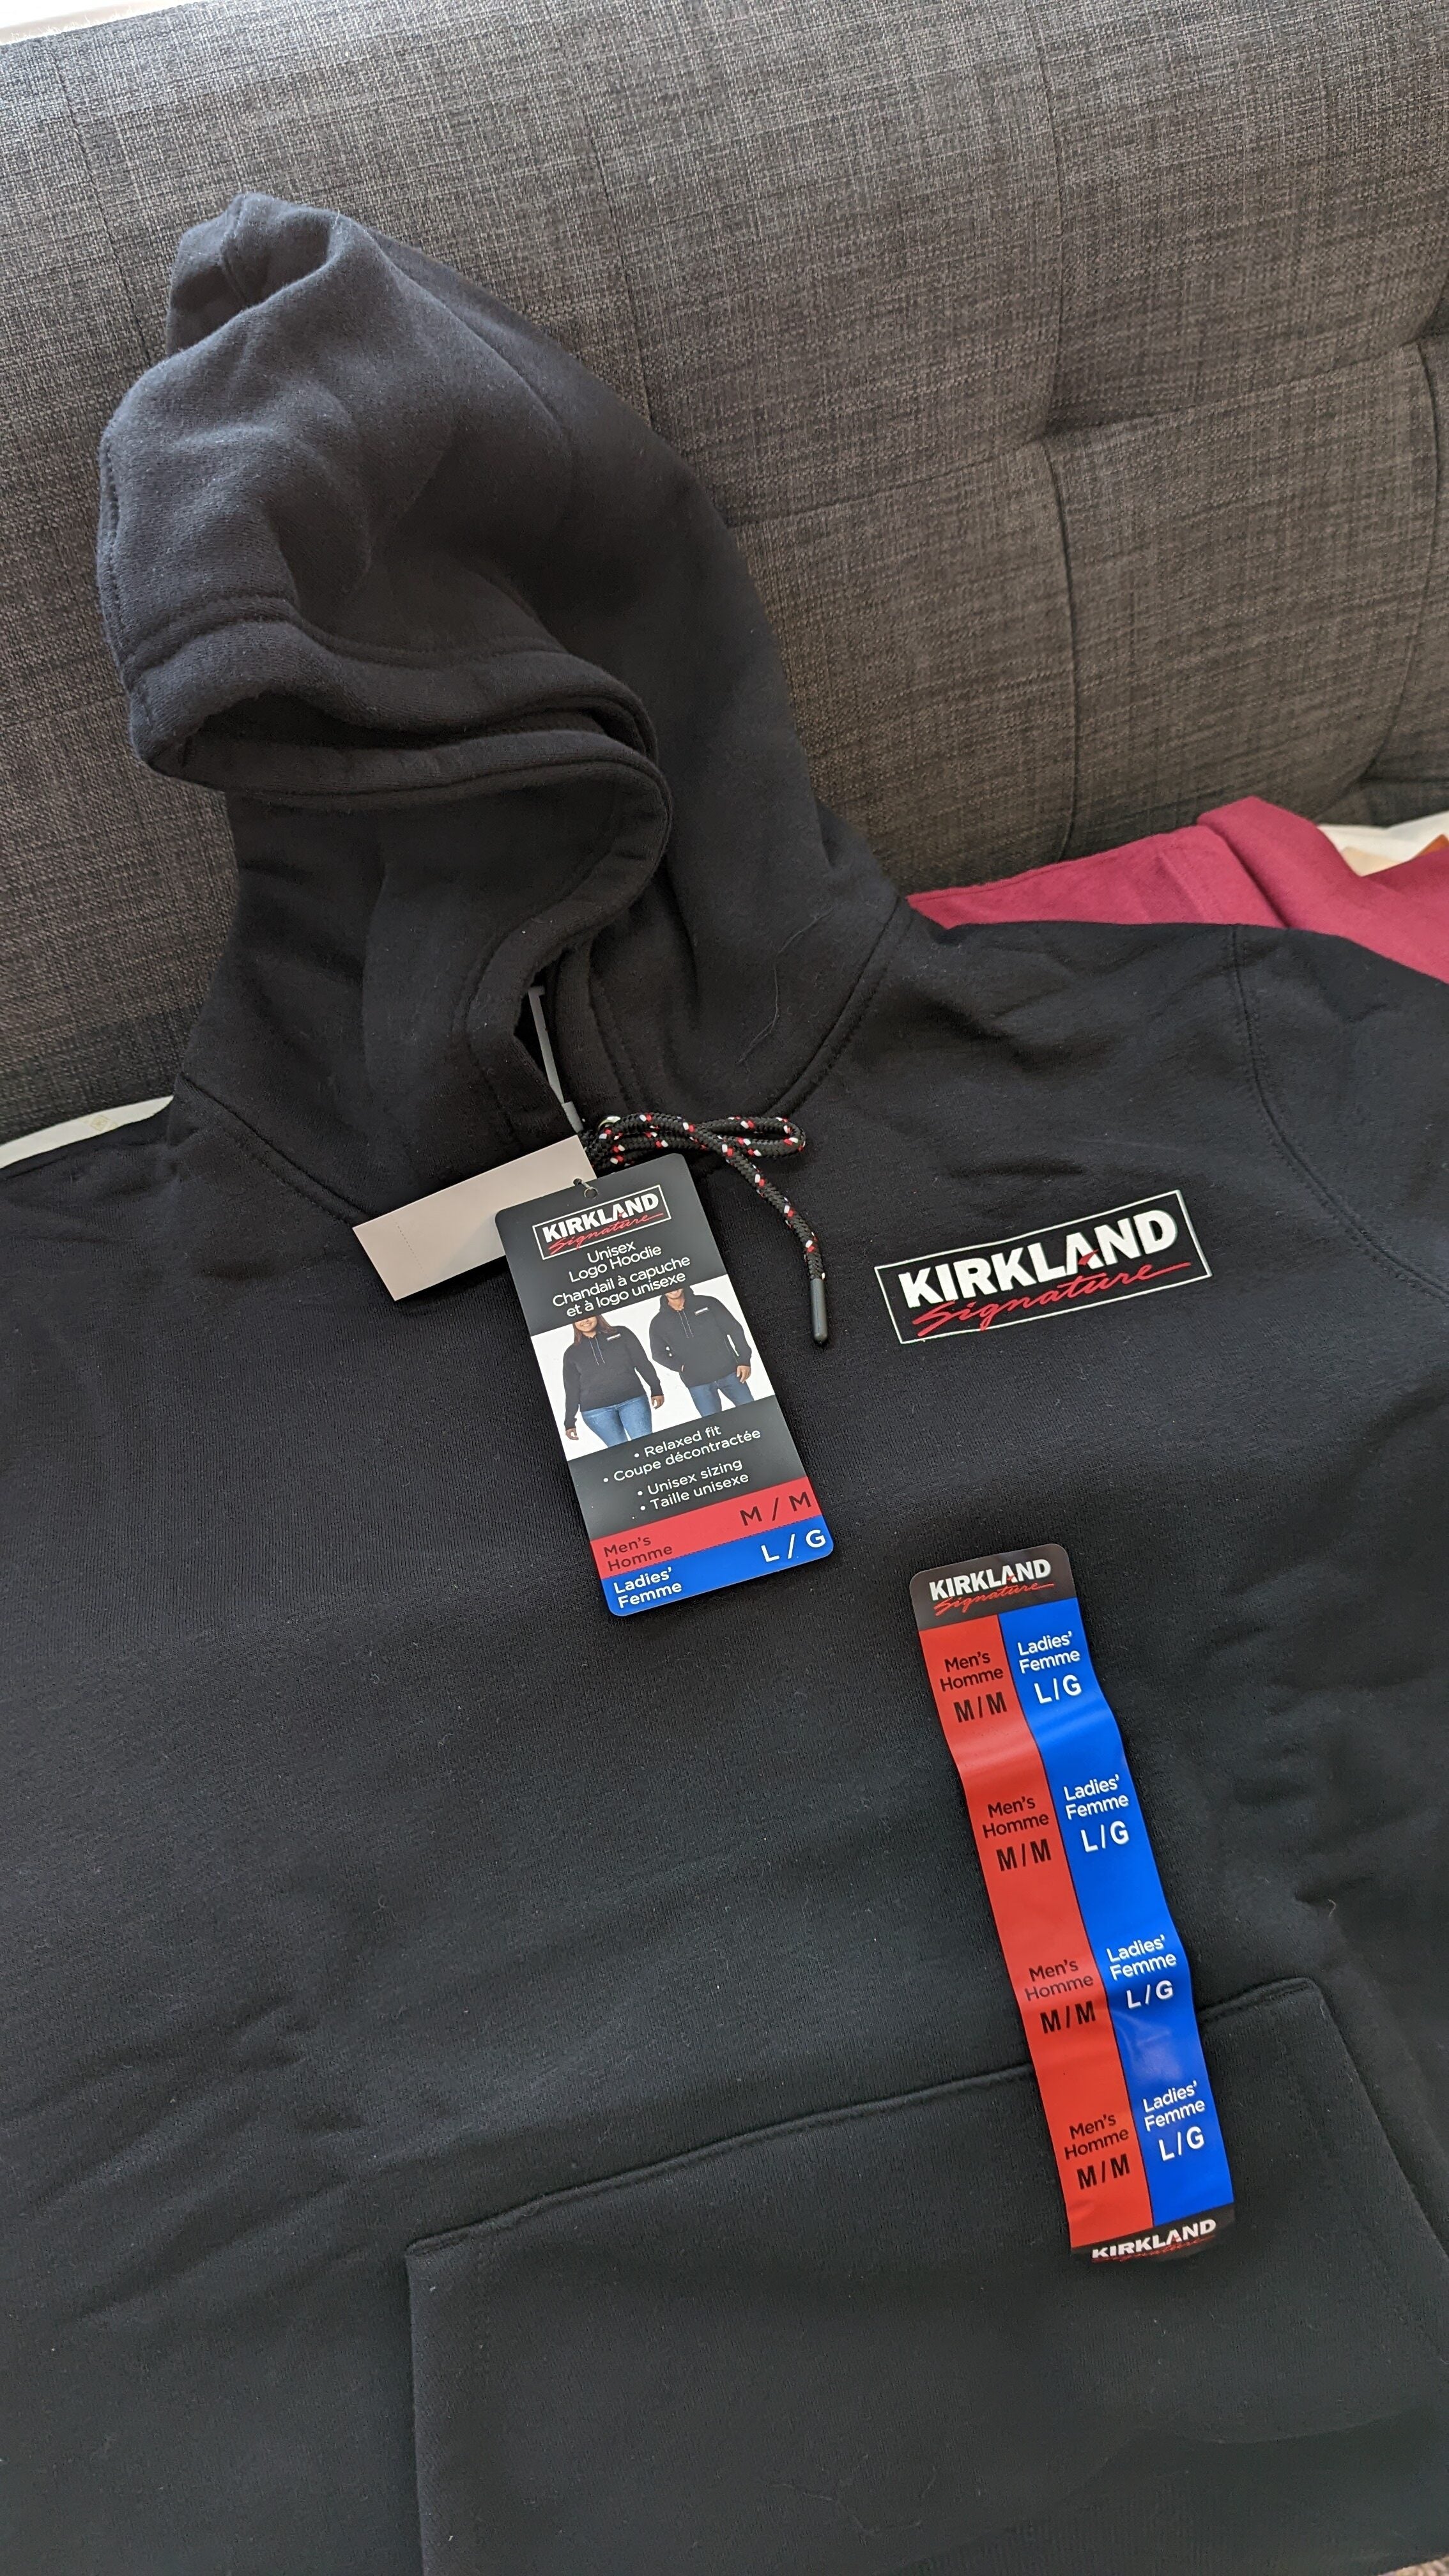 Costco] Kirkland Signature Logo Hoodie - $33.99 !!! - RedFlagDeals